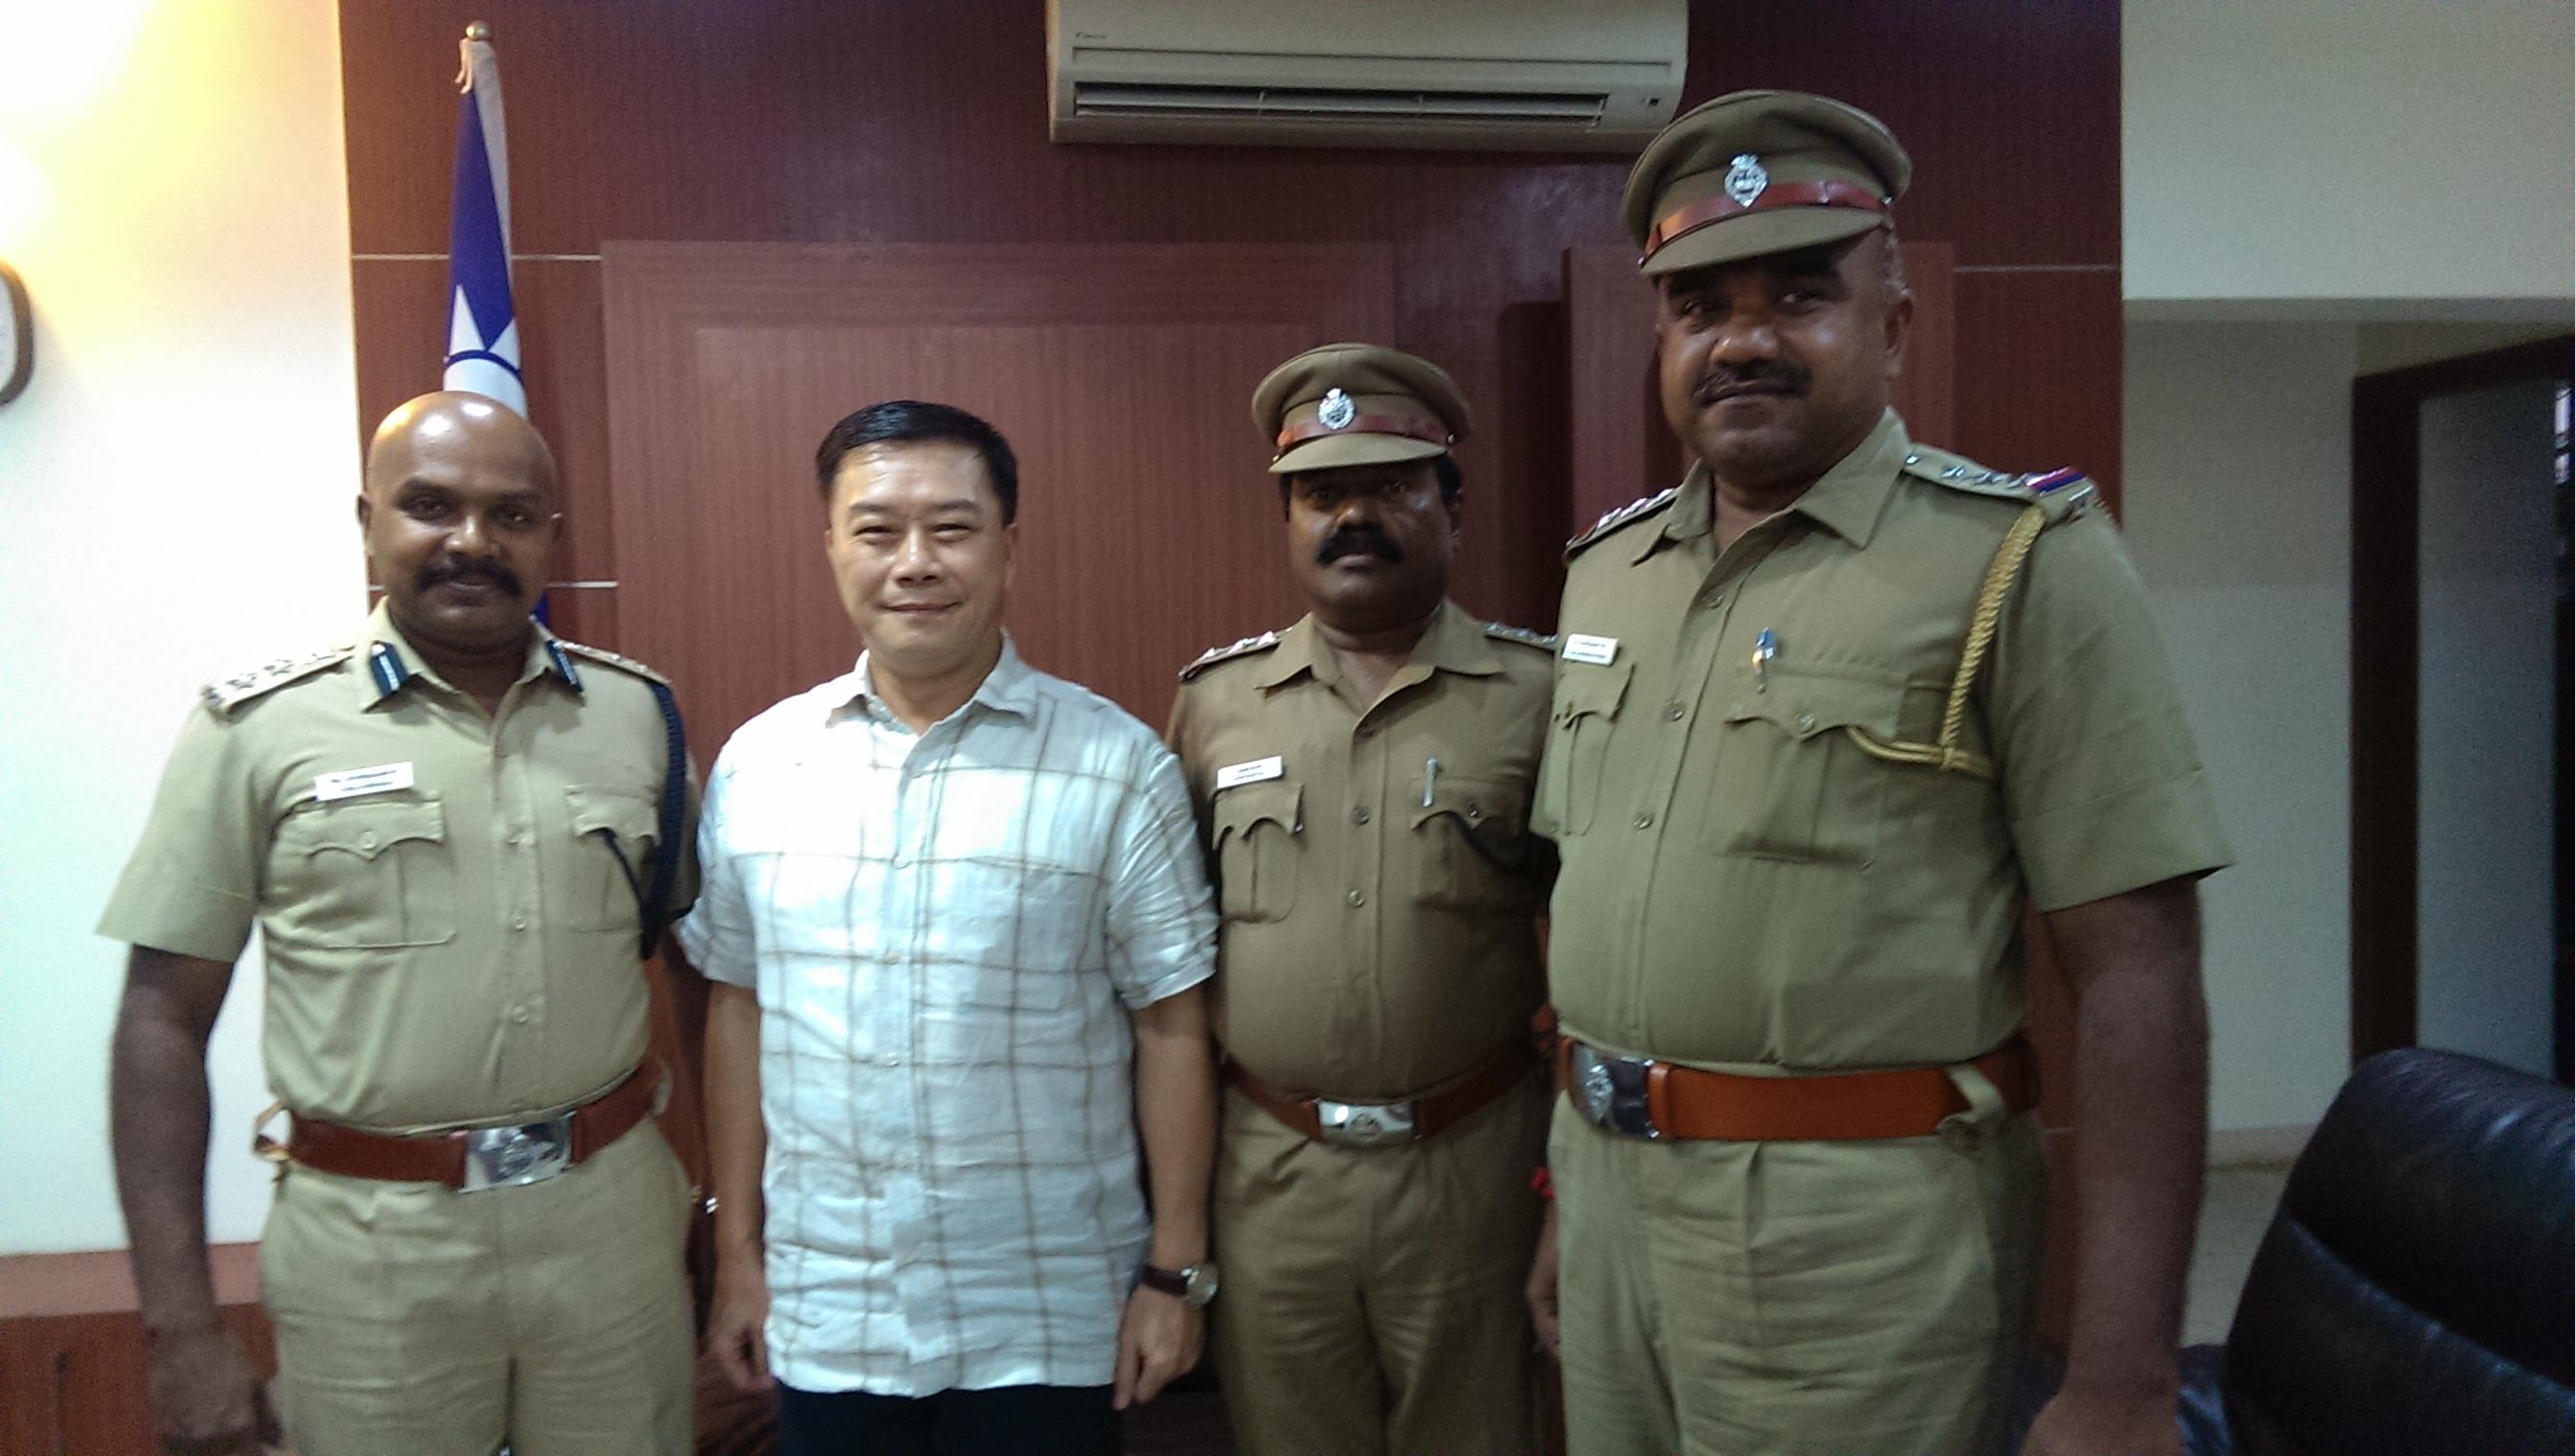 Director General Charles Li (L2)

Mr. V. Balakrishnan（Deputy Commissioner of Police）(L)

Mr. N. Balakrishnan Prabhu（Inspector of Police）(R)

Mr. S. Murugaiyan（Assistant Commissioner of Police） (R2)
